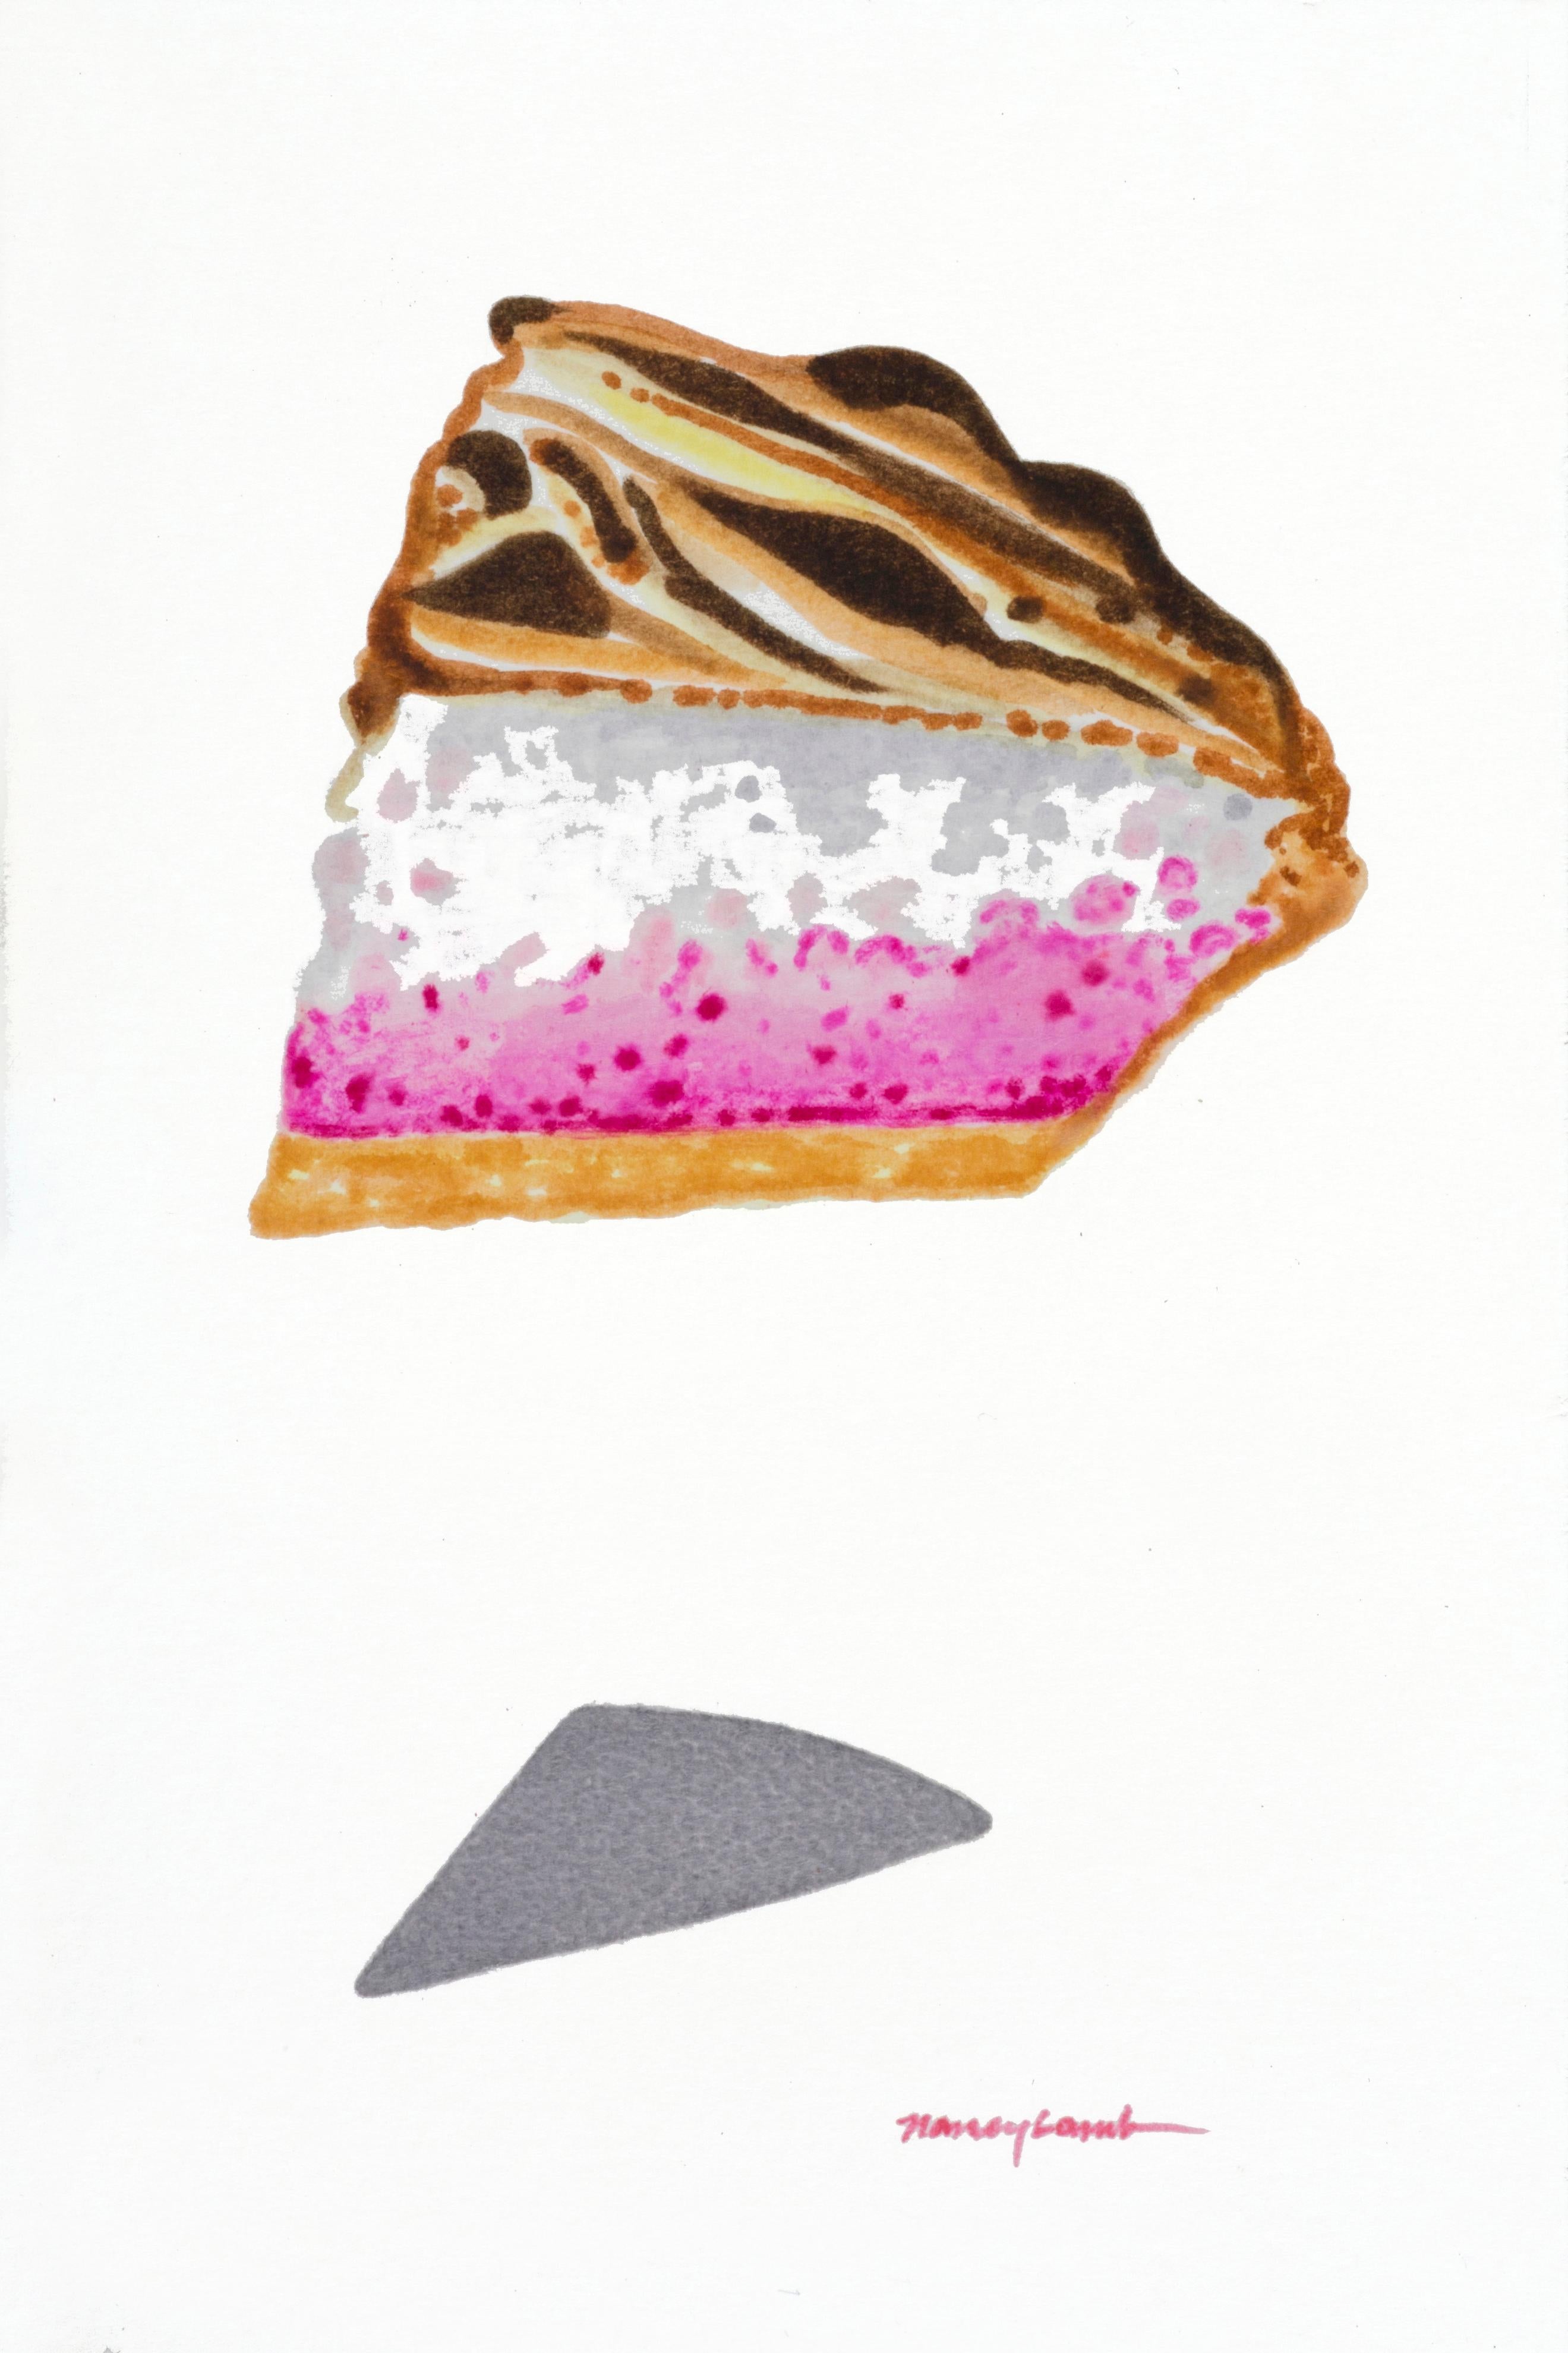 Nancy Lamb  Still-Life - Small Contemporary American Food Watercolor of Bubblegum Pie Dessert for Kitchen